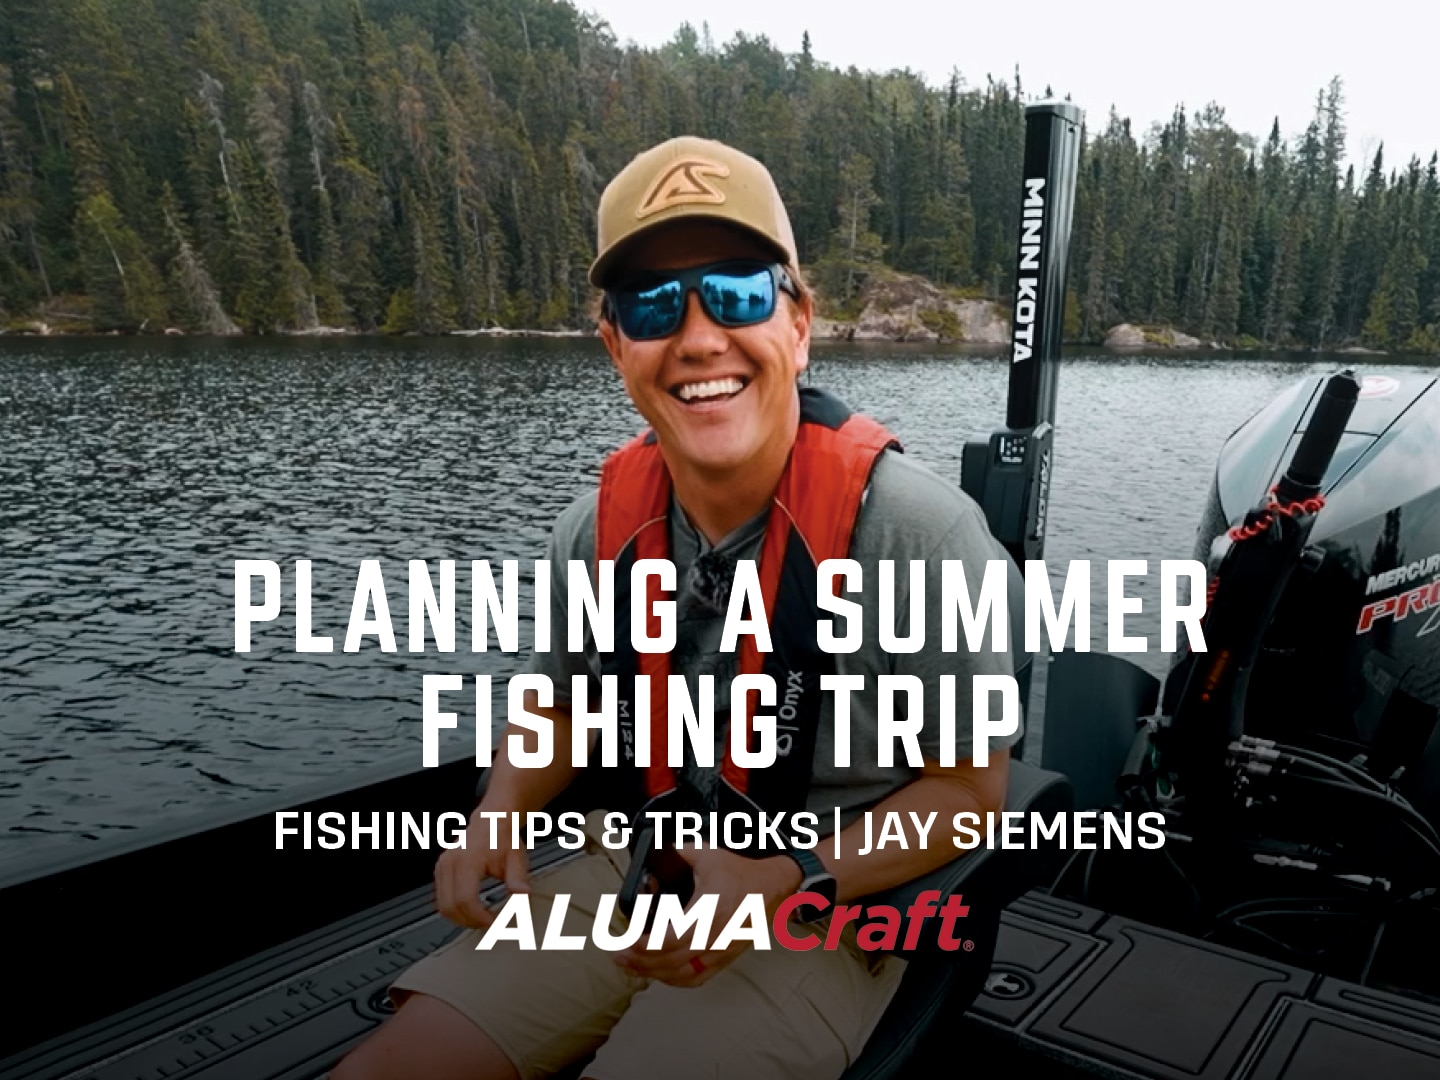 Jay Siemens, Summer Fishing Trip